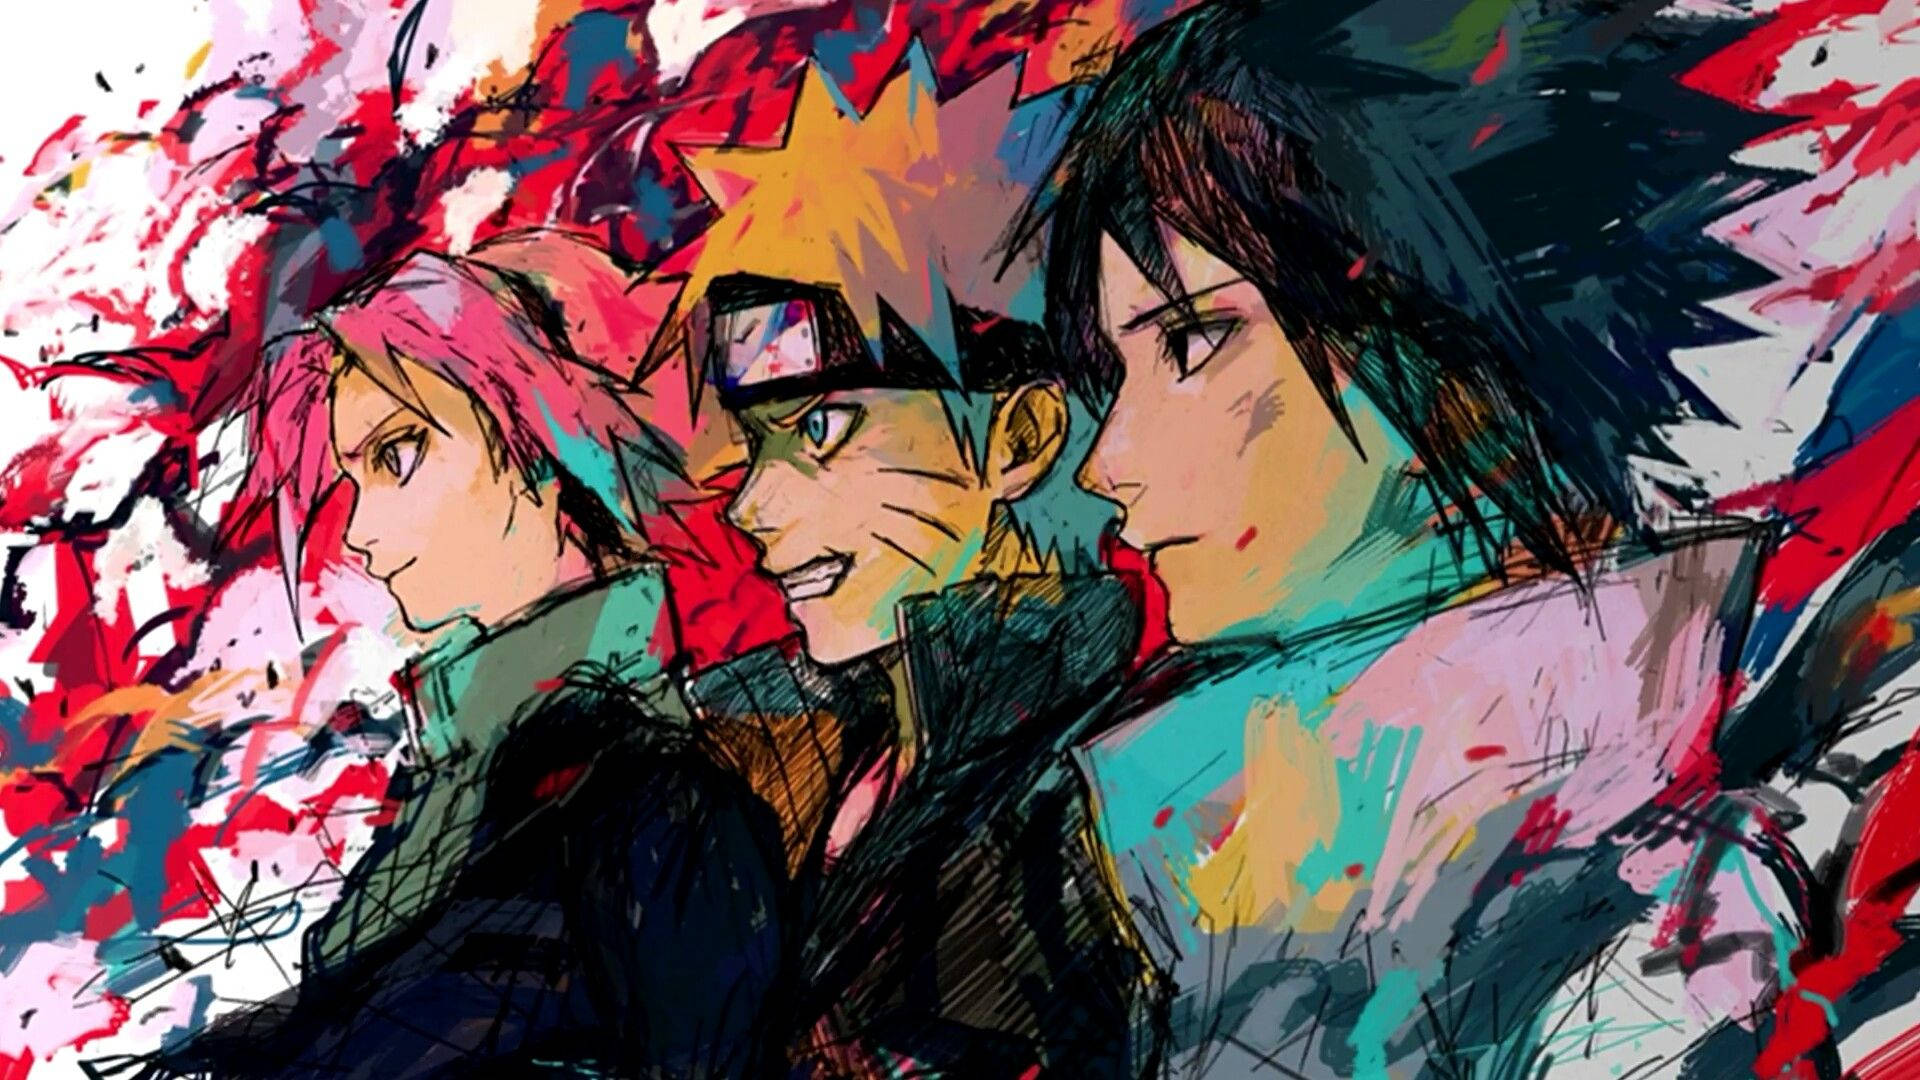 Free Anime Wallpaper Downloads, Anime Wallpaper for FREE